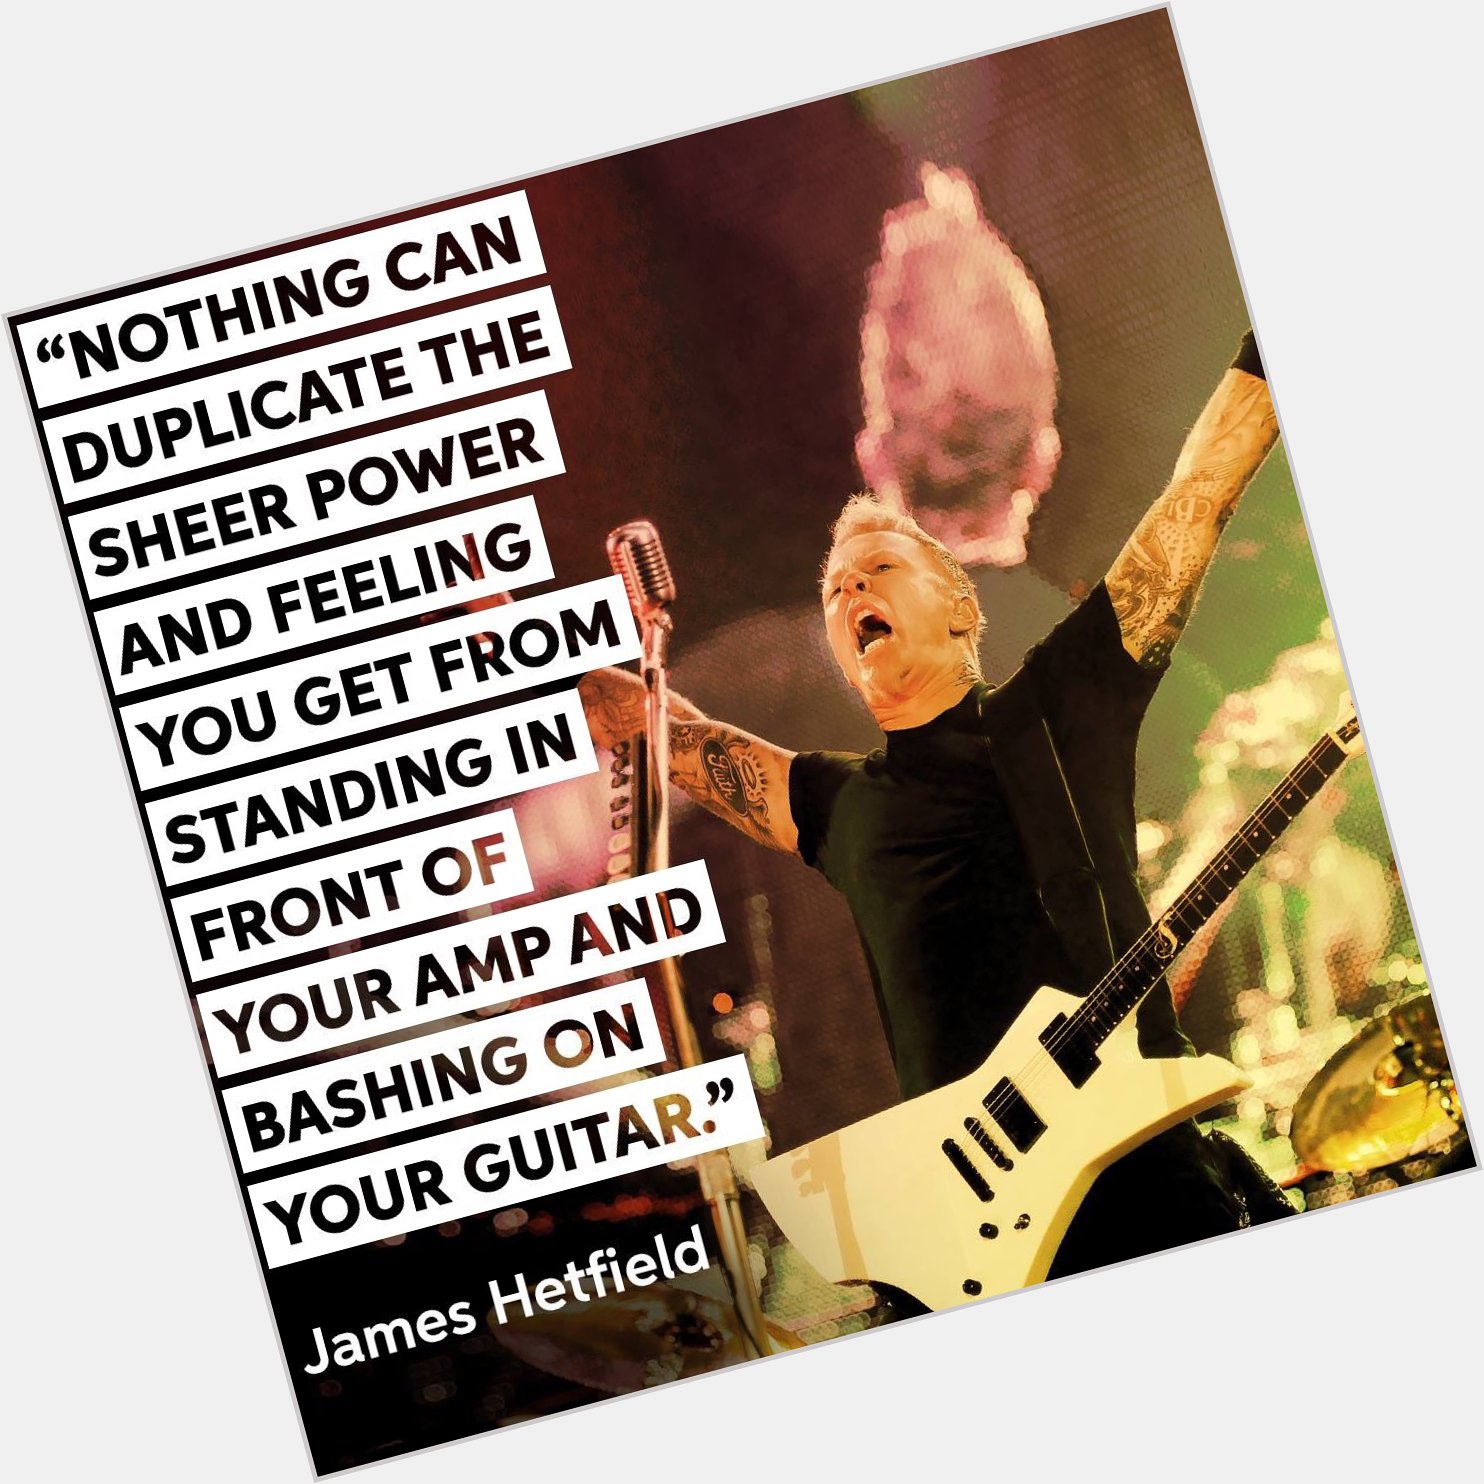   Happy 54th birthday, James Hetfield - 